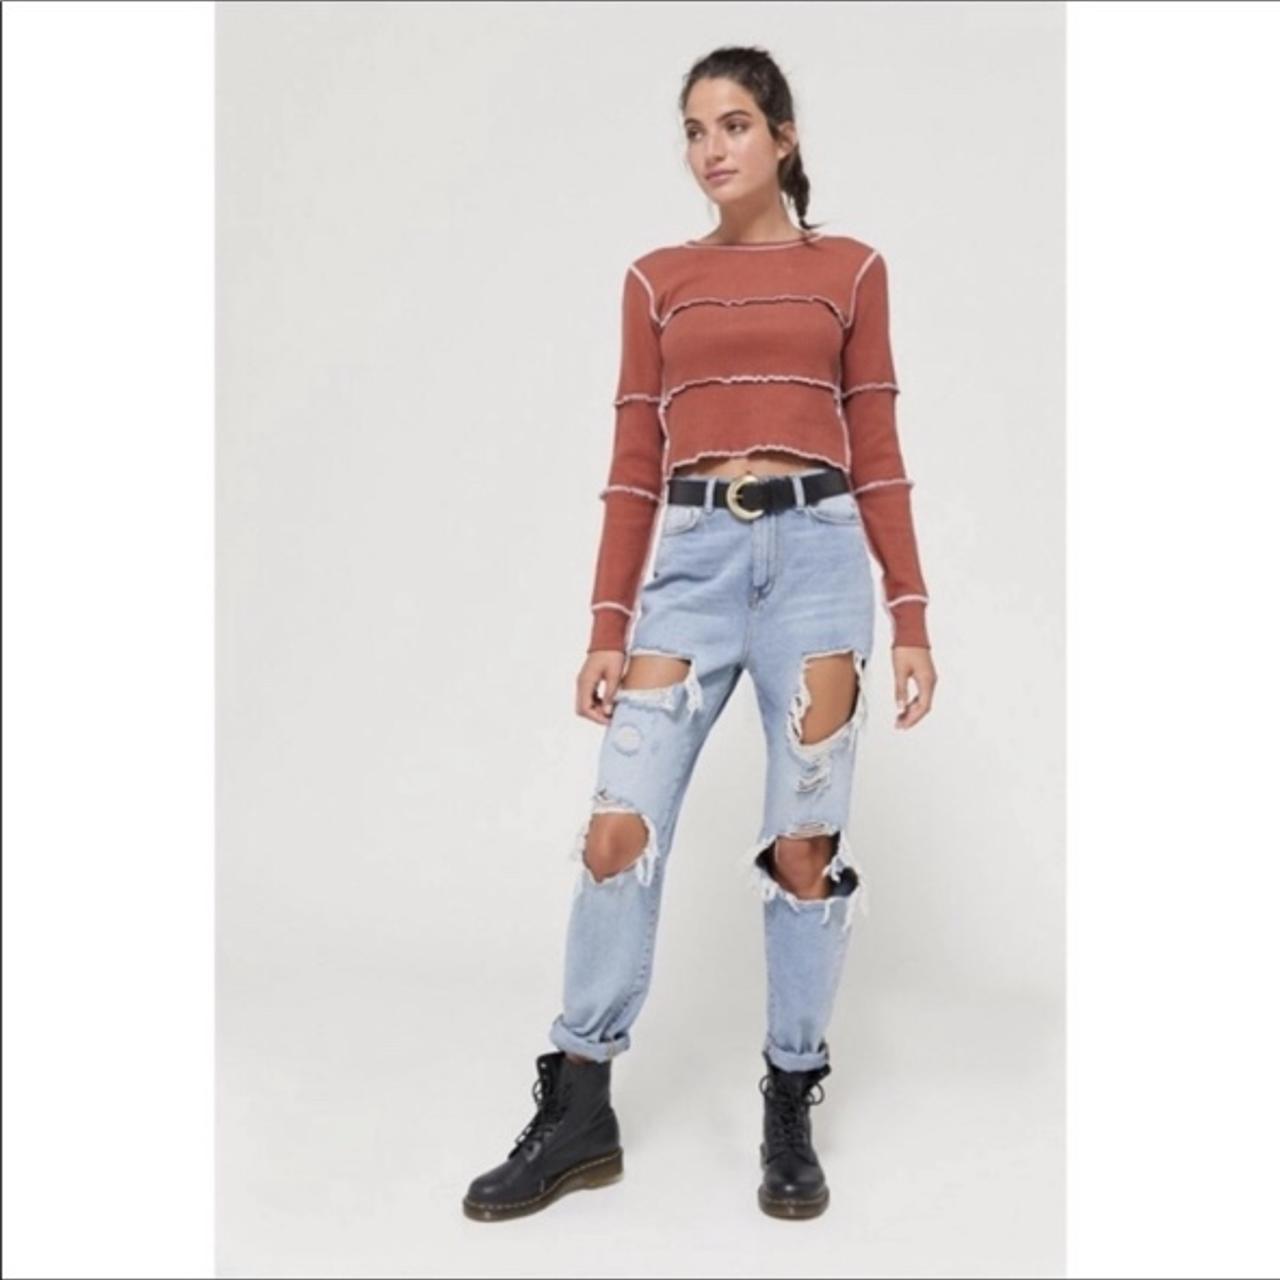 Urban Outfitters Women's Jeans | Depop